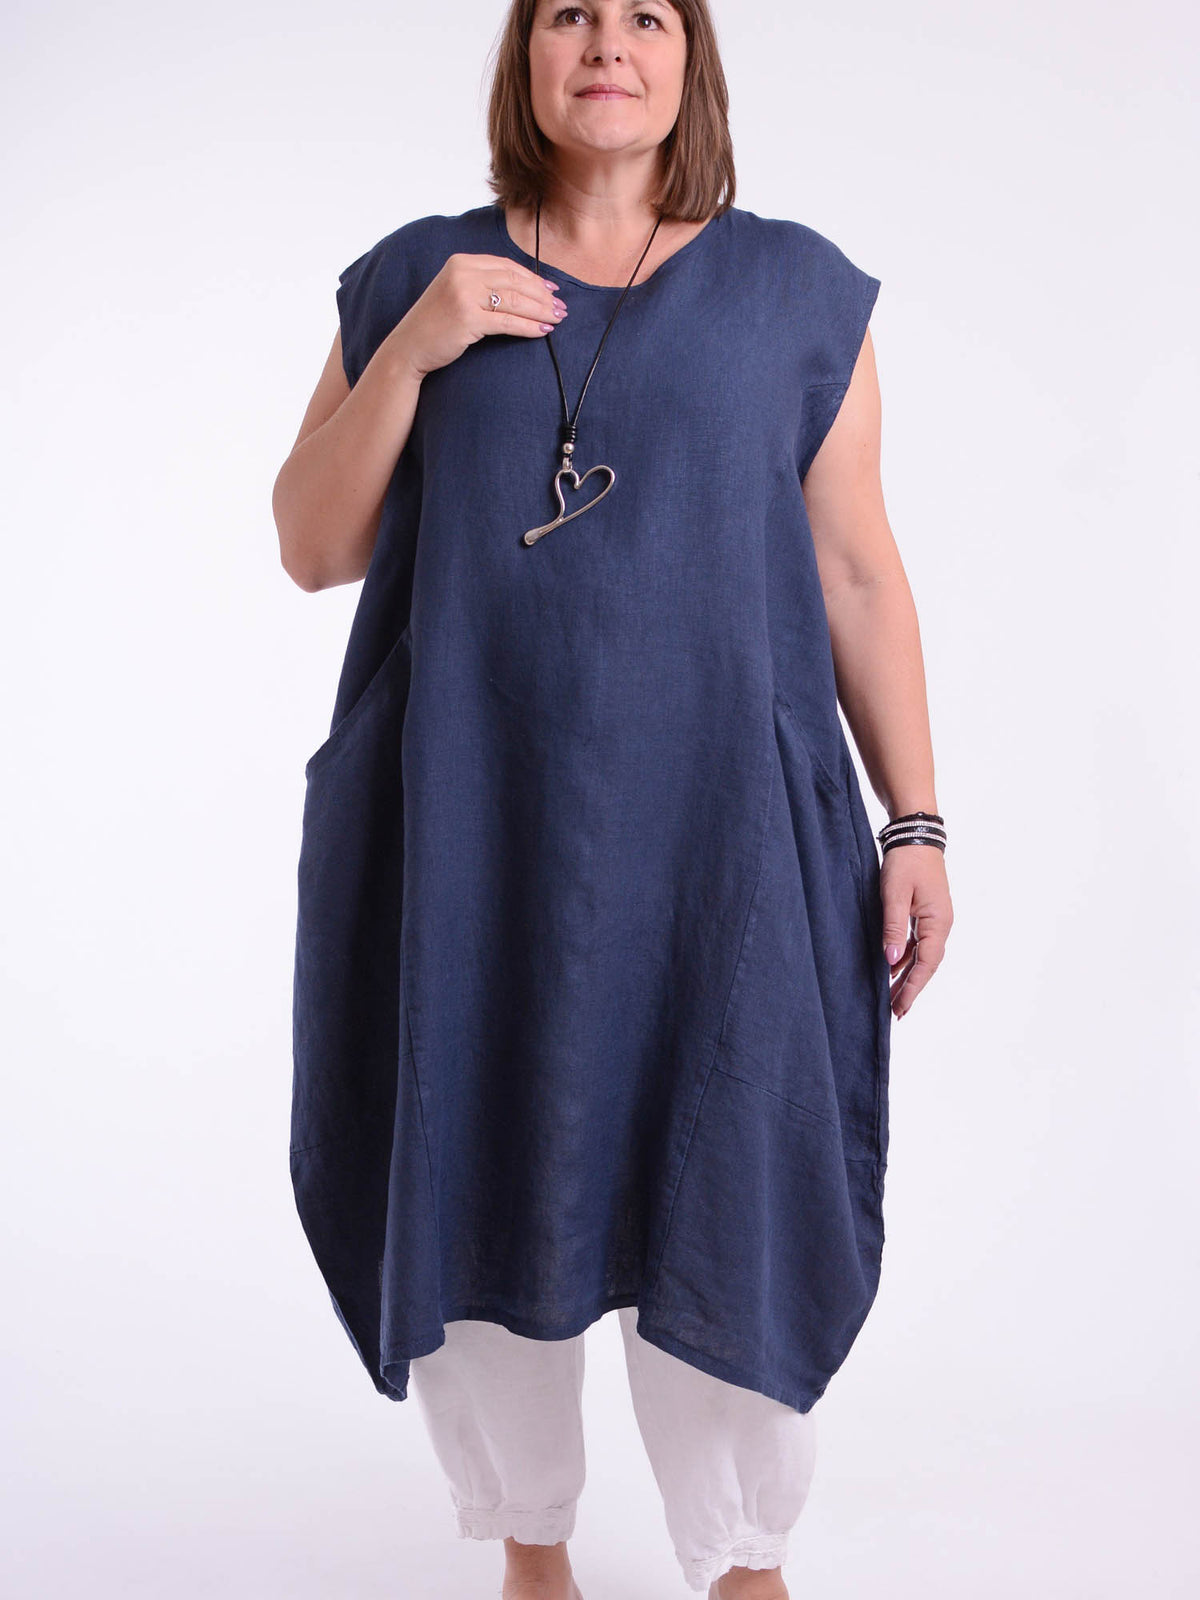 Lagenlook Plus Size Linen Cap Sleeve Dress with Deep Pockets - 9450 Linen, Dresses, Pure Plus Clothing, Lagenlook Clothing, Plus Size Fashion, Over 50 Fashion